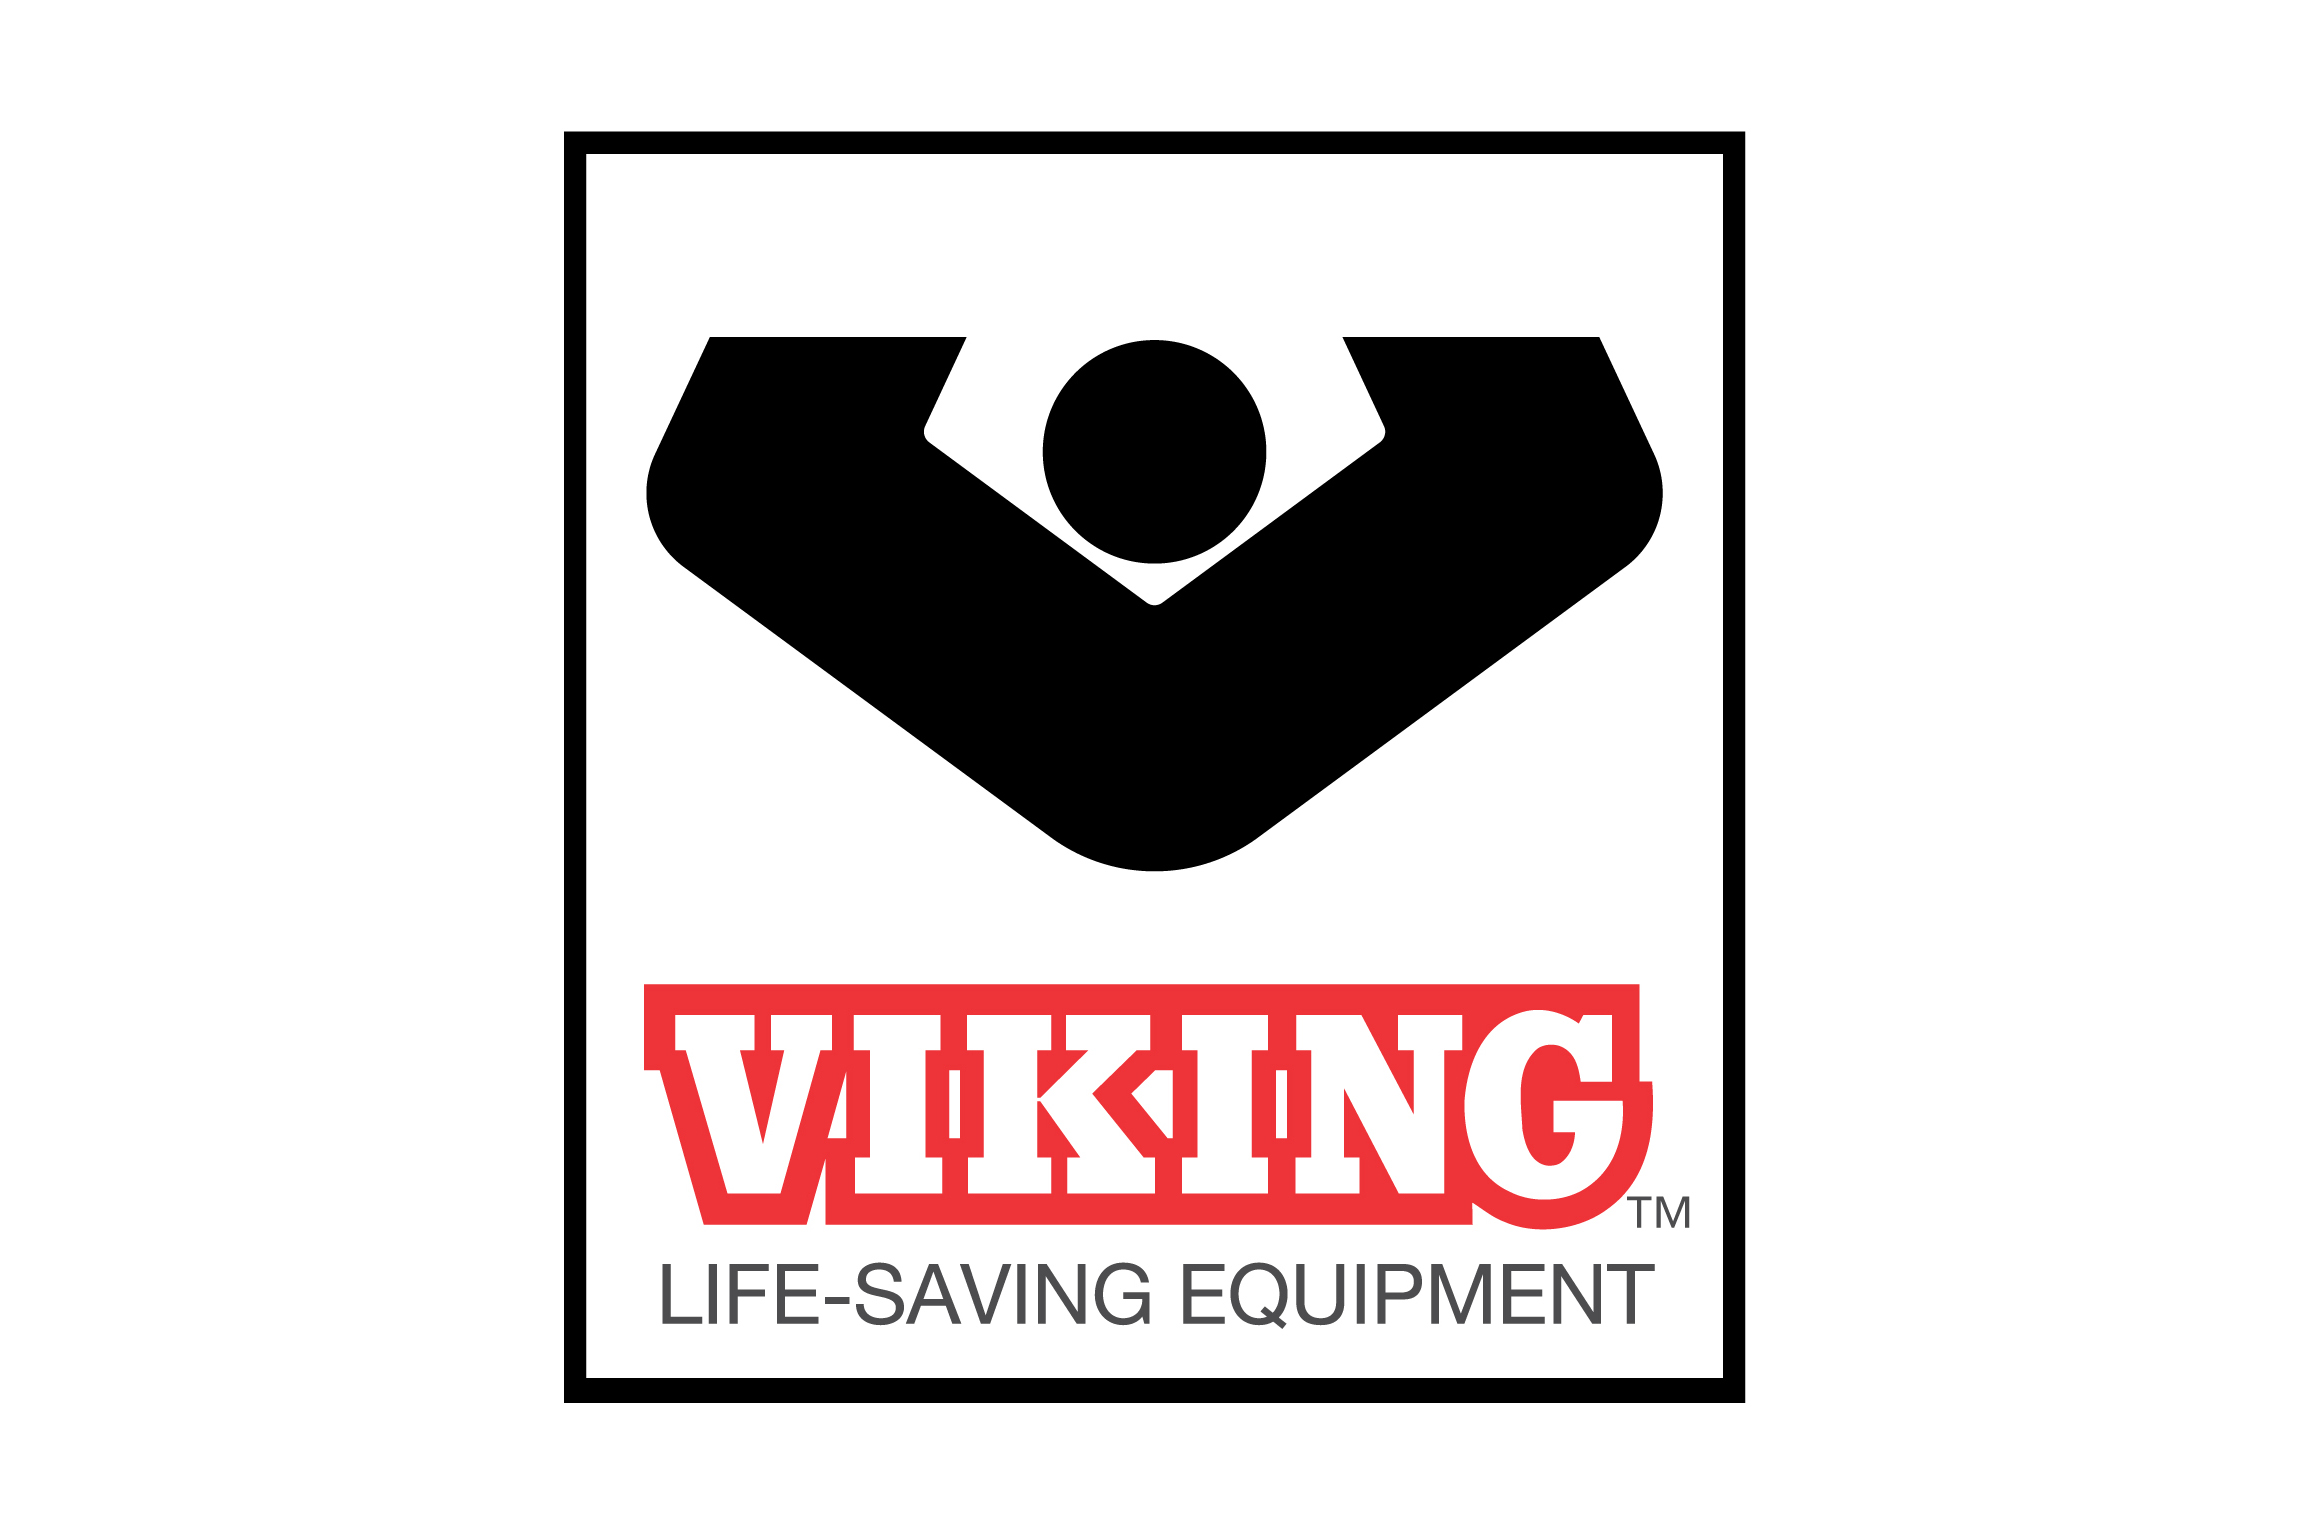 VIKING_logo 4x6